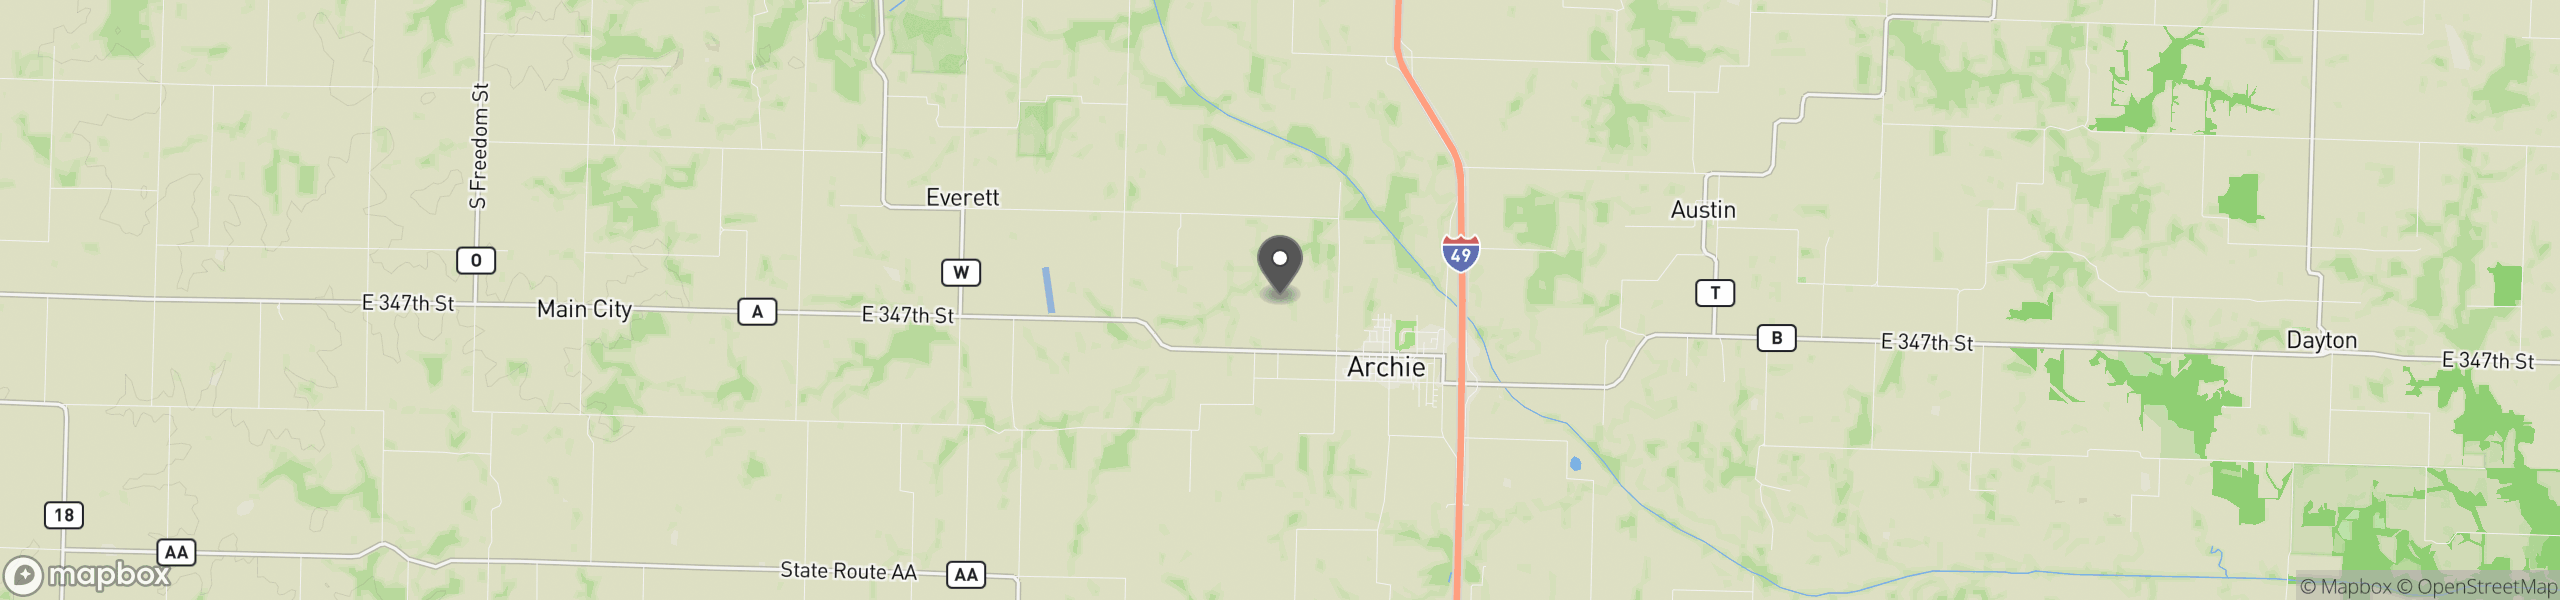 Archie, MO 64725